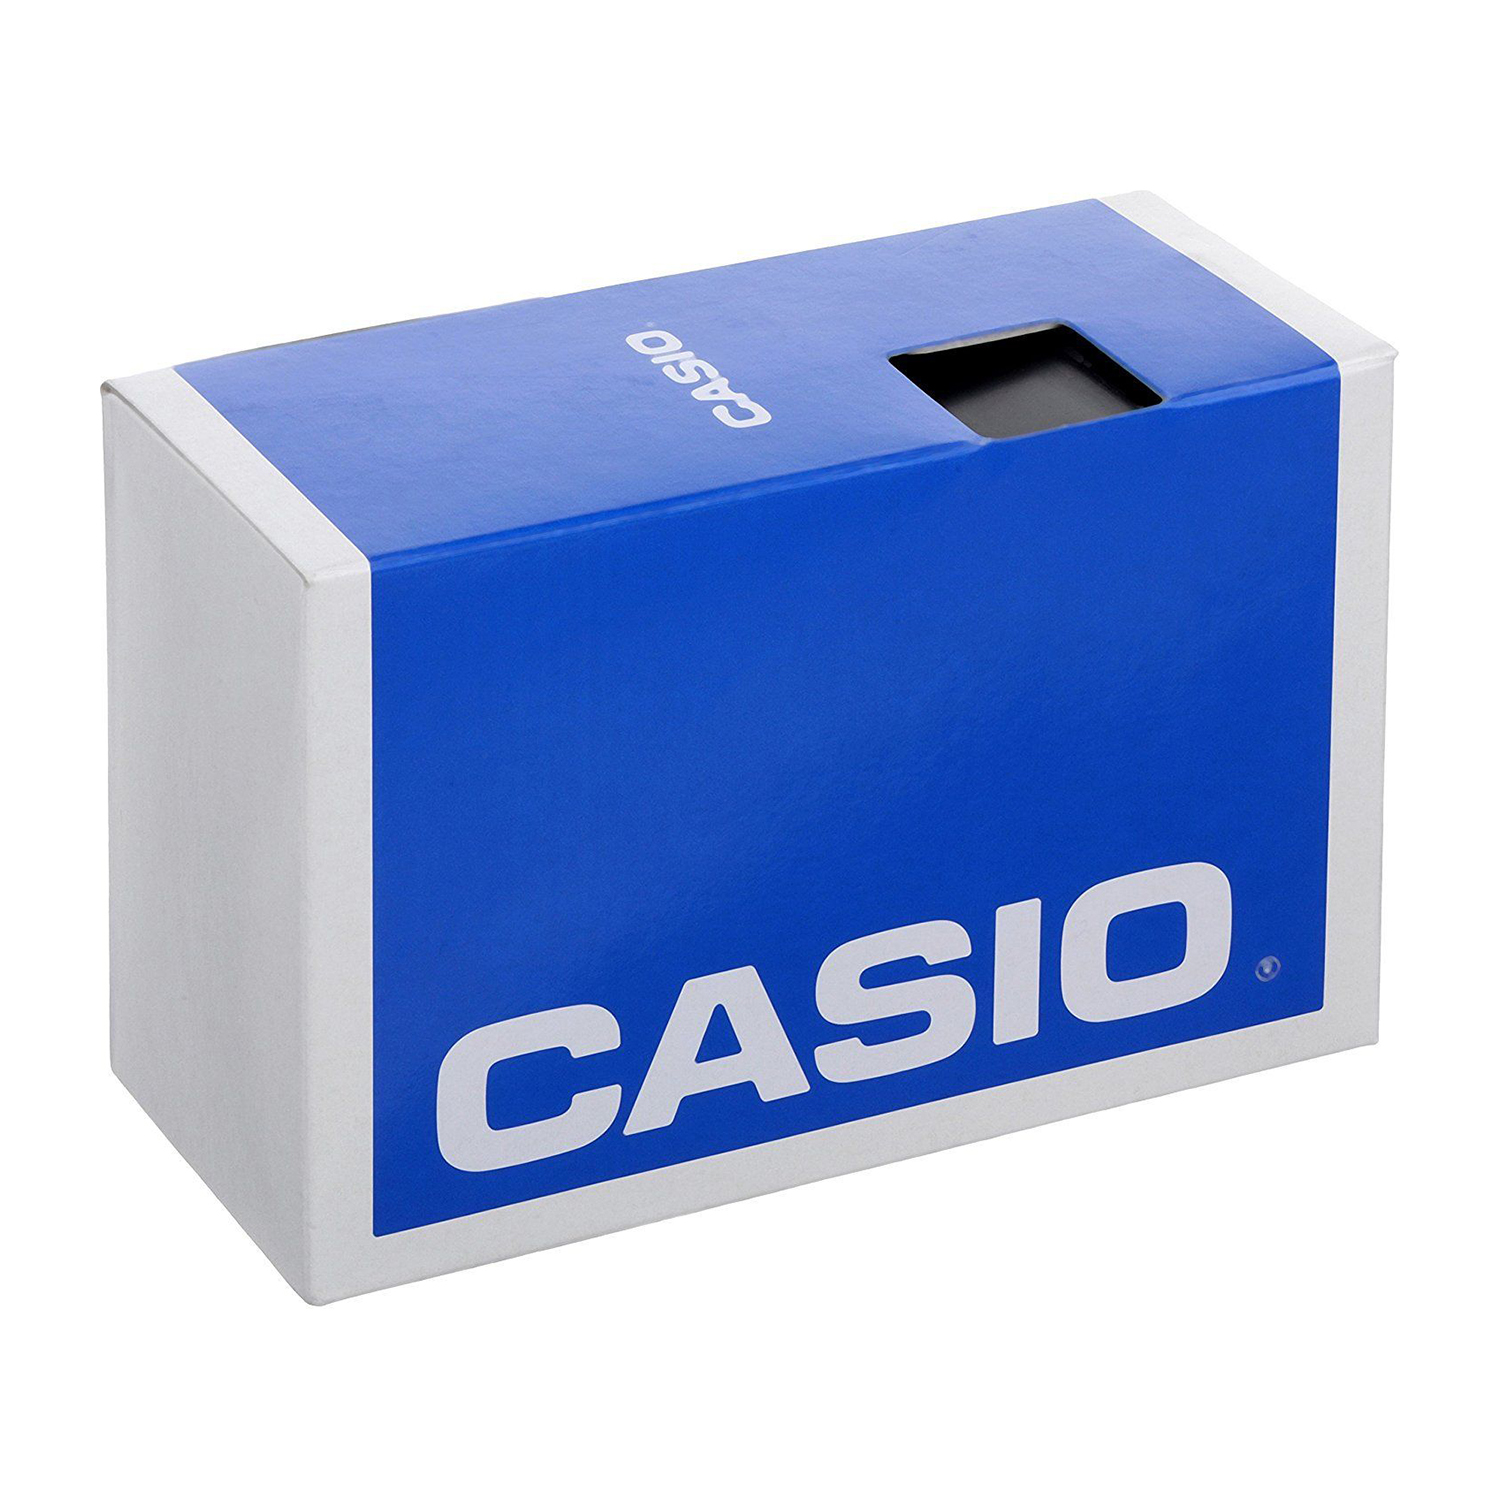 Casio Baby-G Black Digital Watch BG169R-1M - image 2 of 3